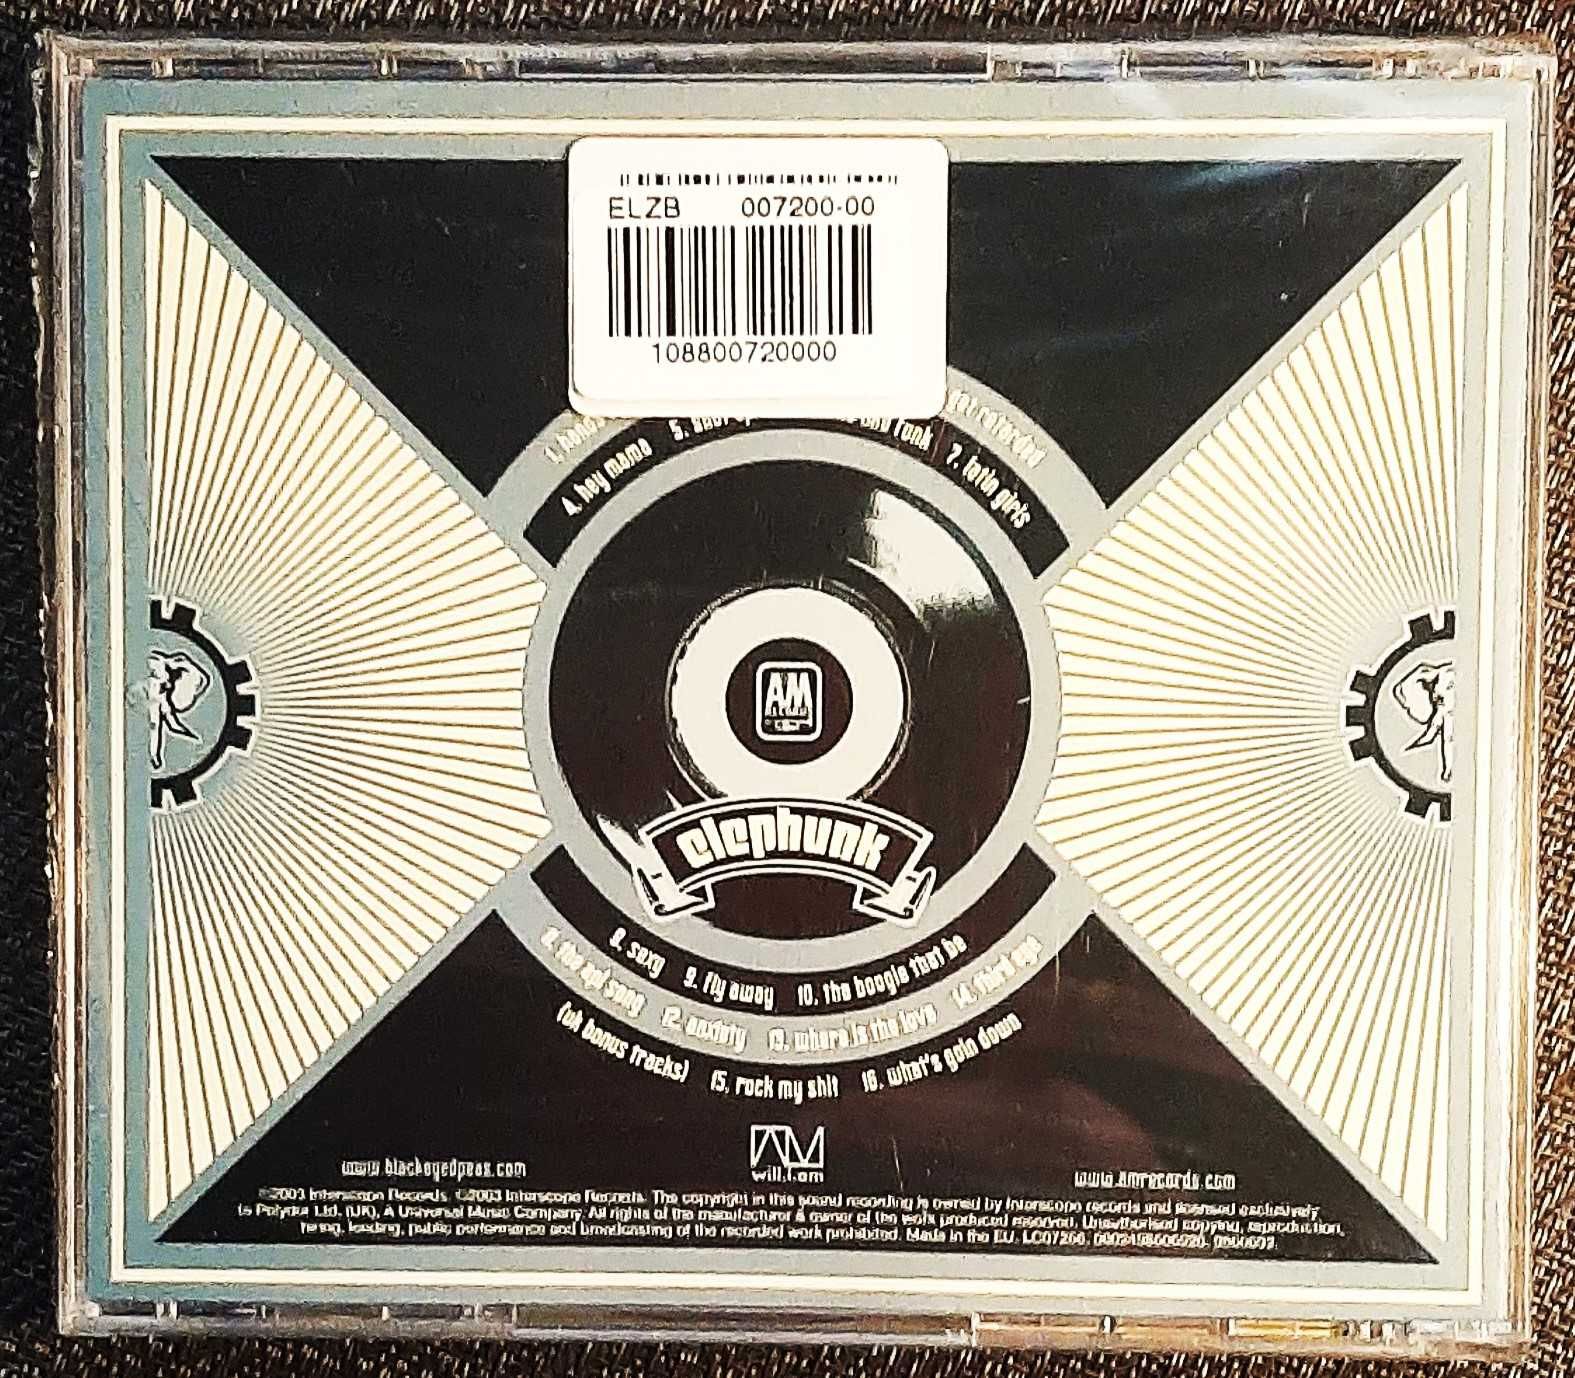 Polecam Album CD THE B;ACK EYED  PERS Album Elephunk  CD